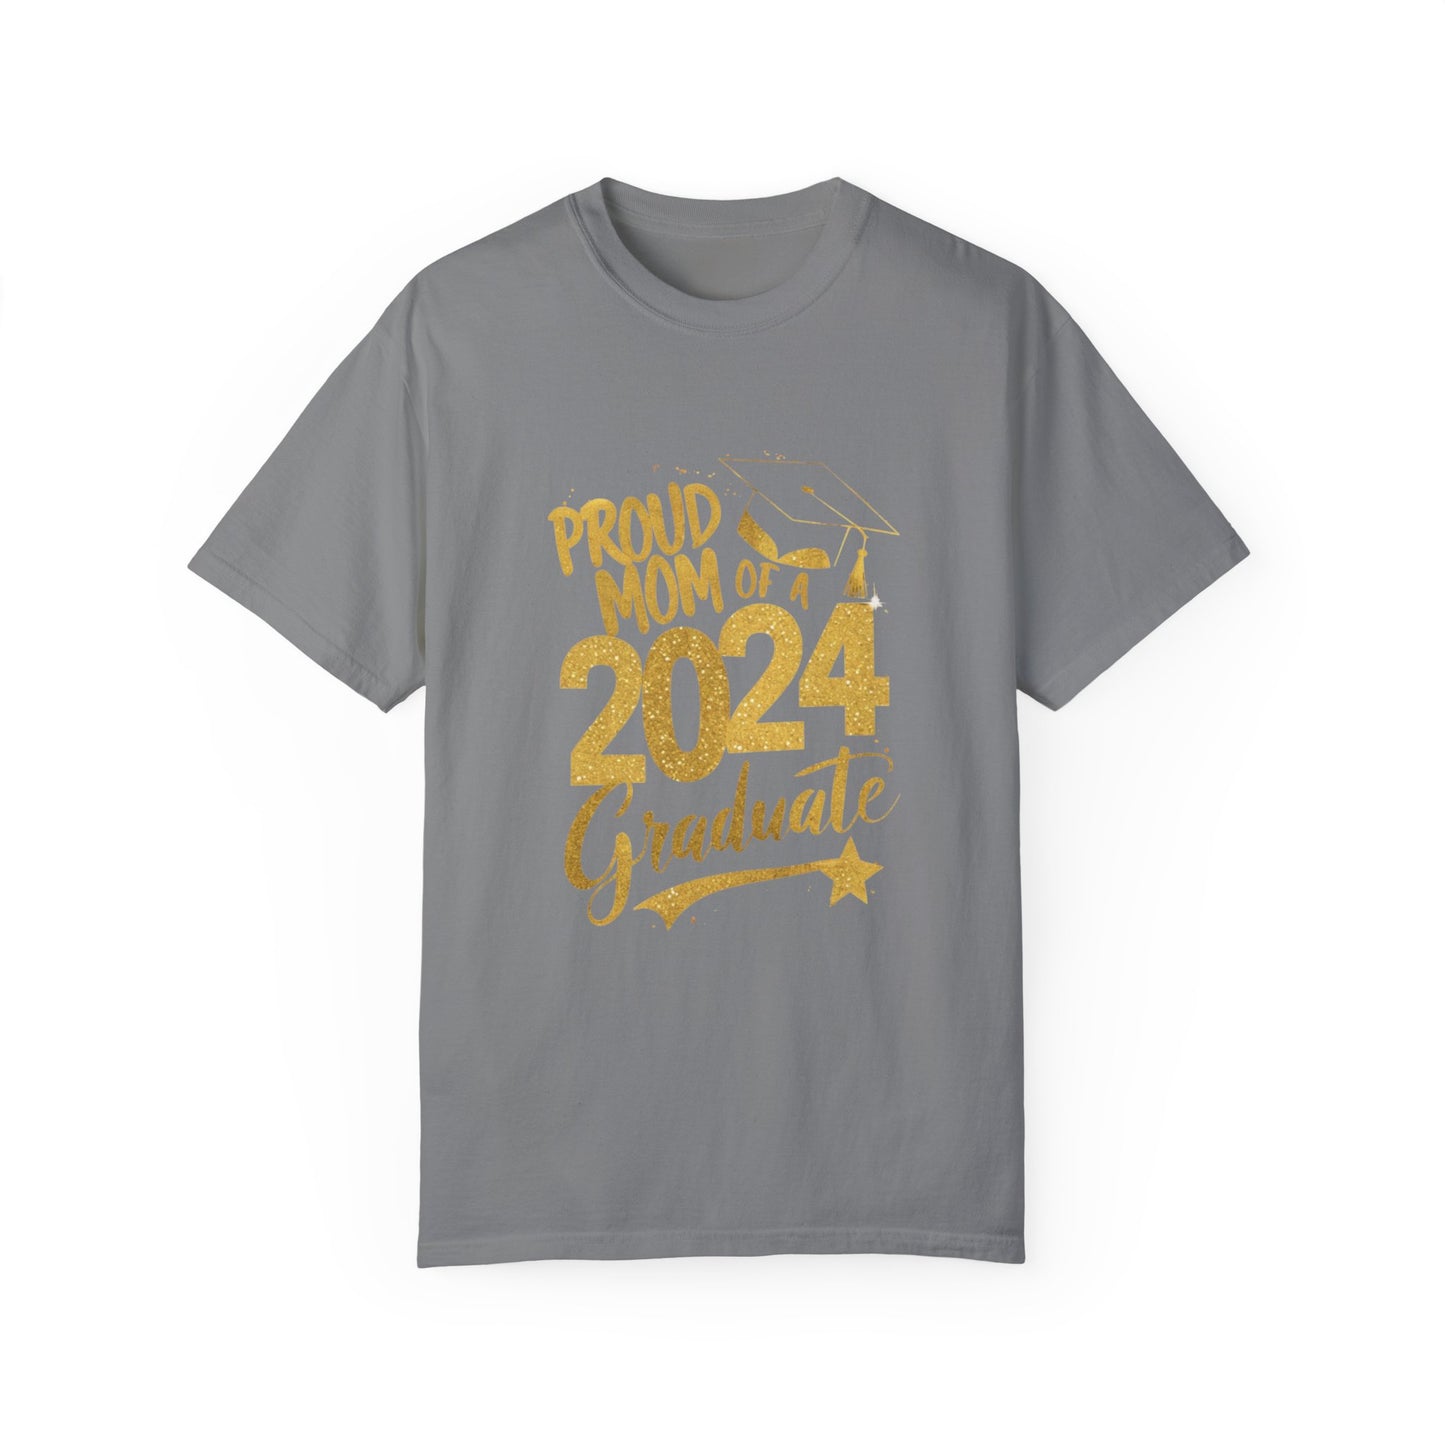 Proud of Mom 2024 Graduate Unisex Garment-dyed T-shirt Cotton Funny Humorous Graphic Soft Premium Unisex Men Women Grey T-shirt Birthday Gift-9